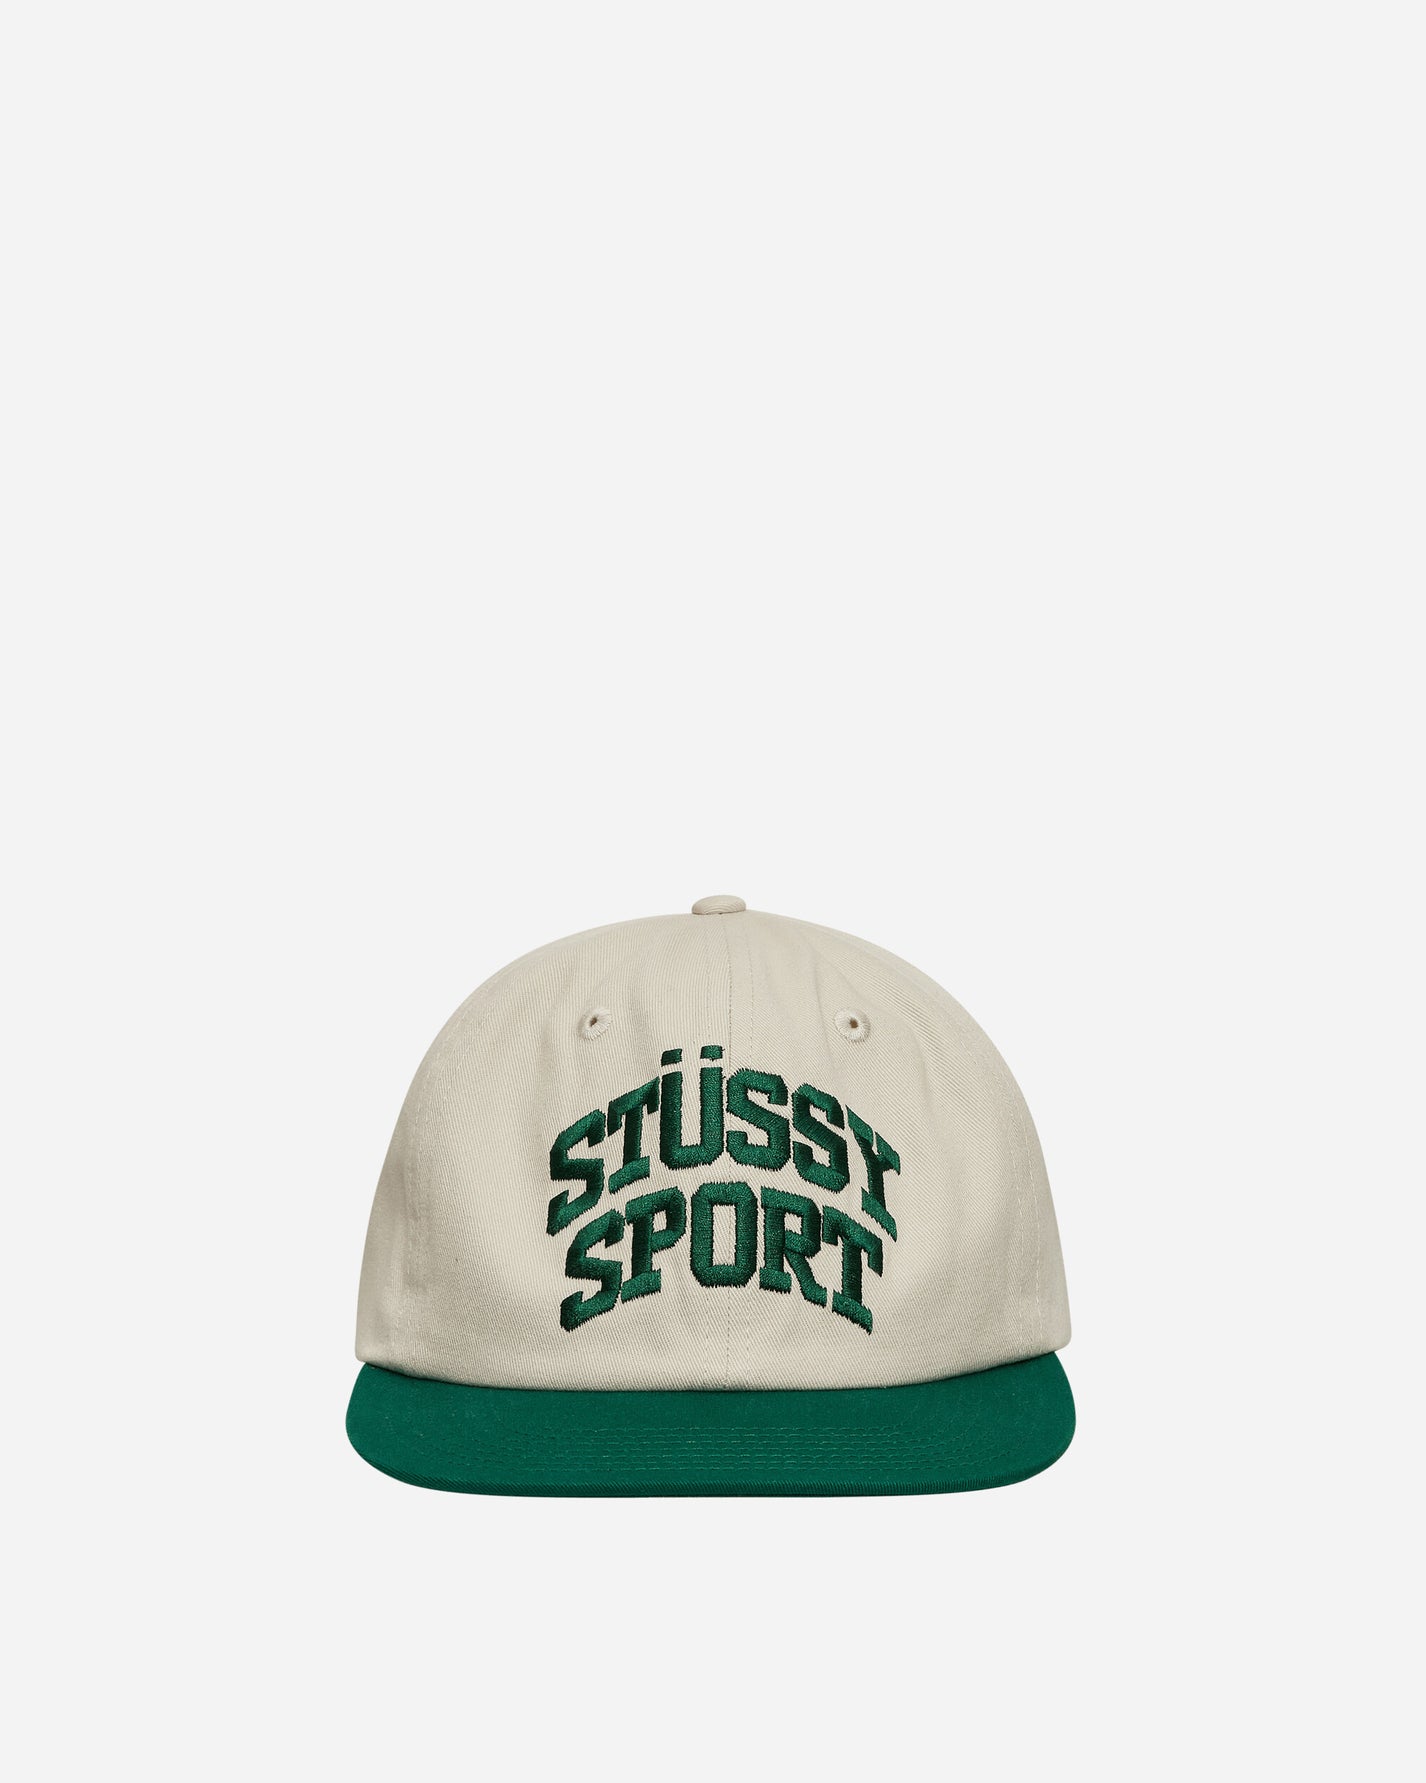 Stüssy Stussy Sport Cap Natural Hats Caps 1311101 1002